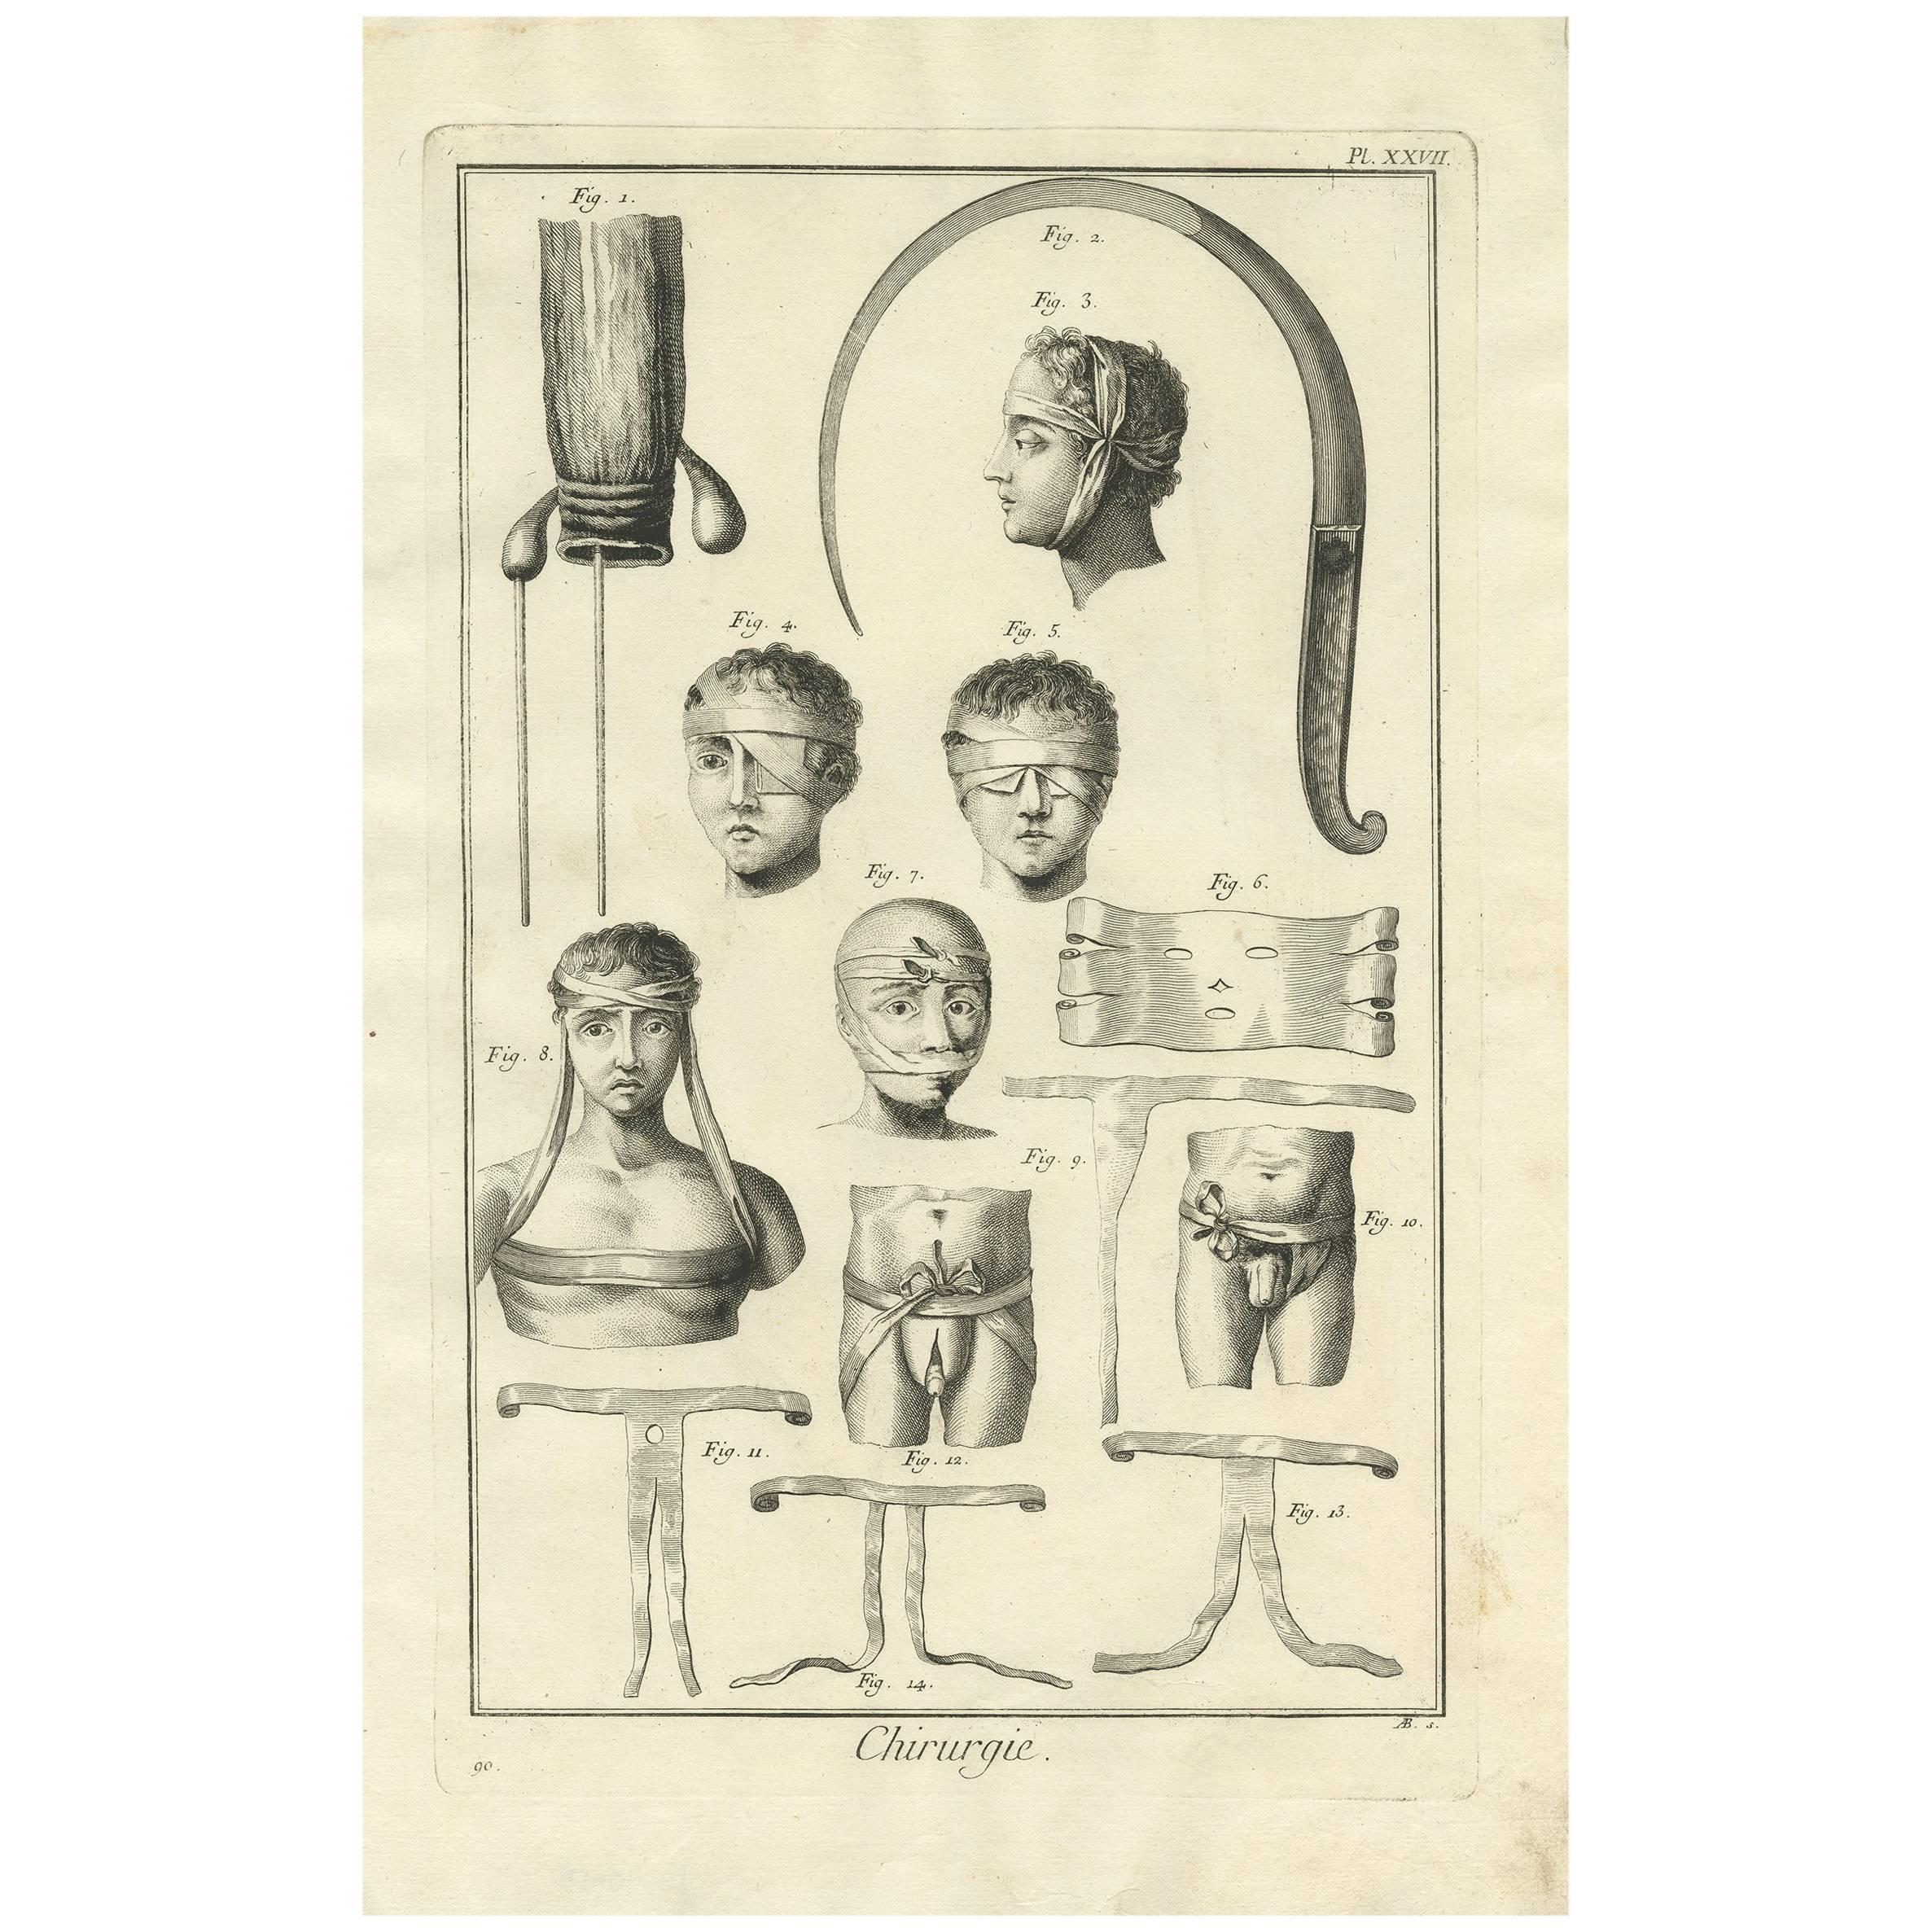 Antique Medical Print 'Pl. XXVII' by D. Diderot, circa 1760